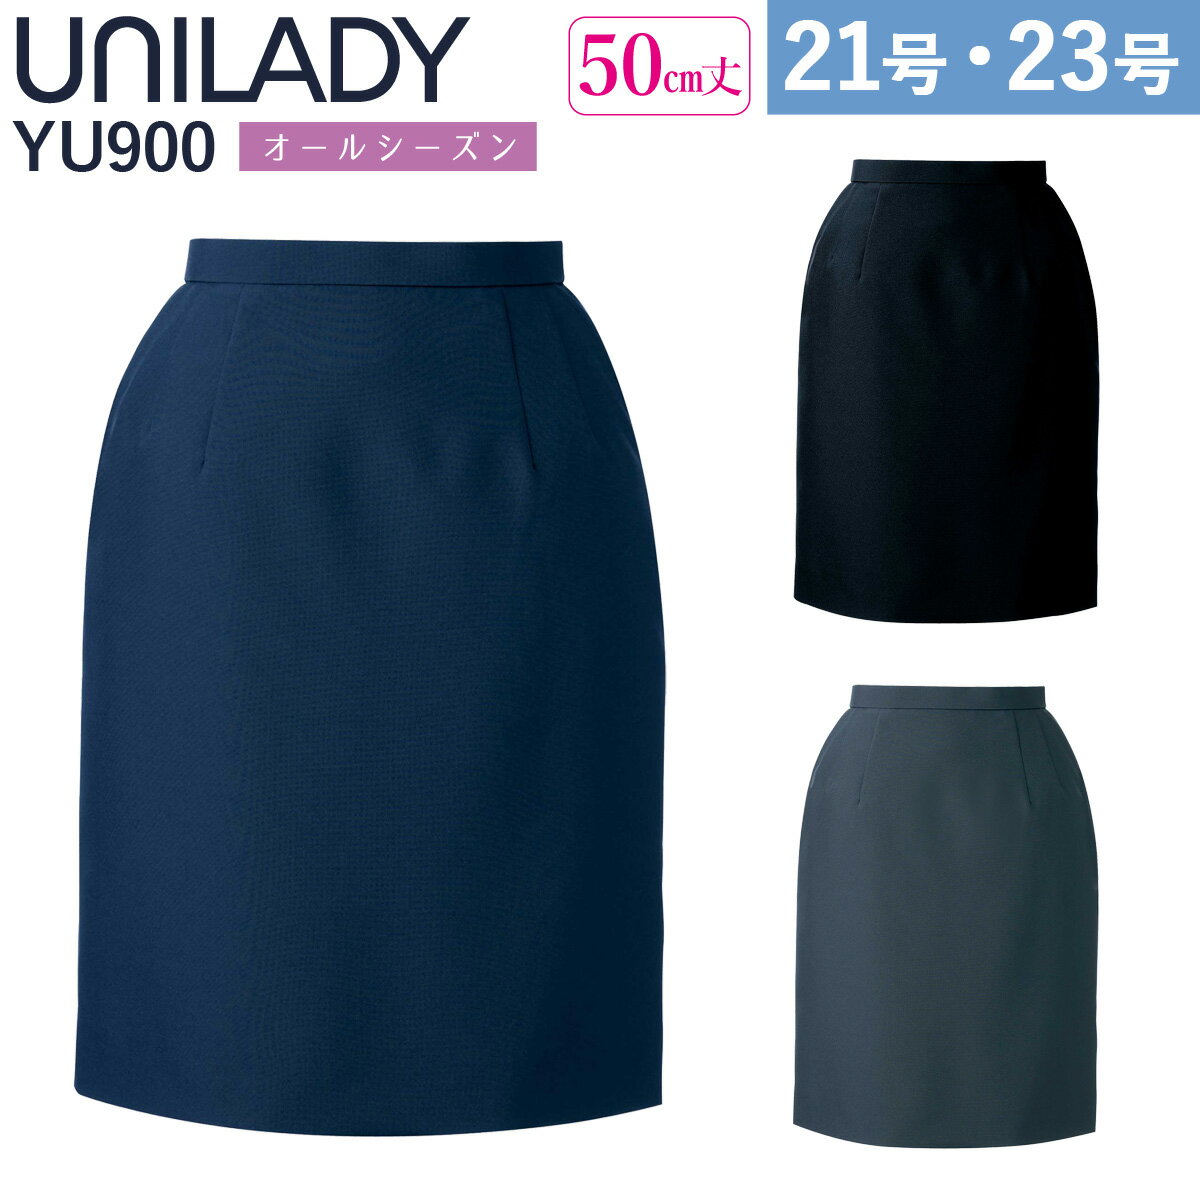 UNILADY スカート 21号 23号 YU900 ショート丈 大きいサイズ ベストセラー 家庭用洗濯機可 無地 オールシーズン 制服…